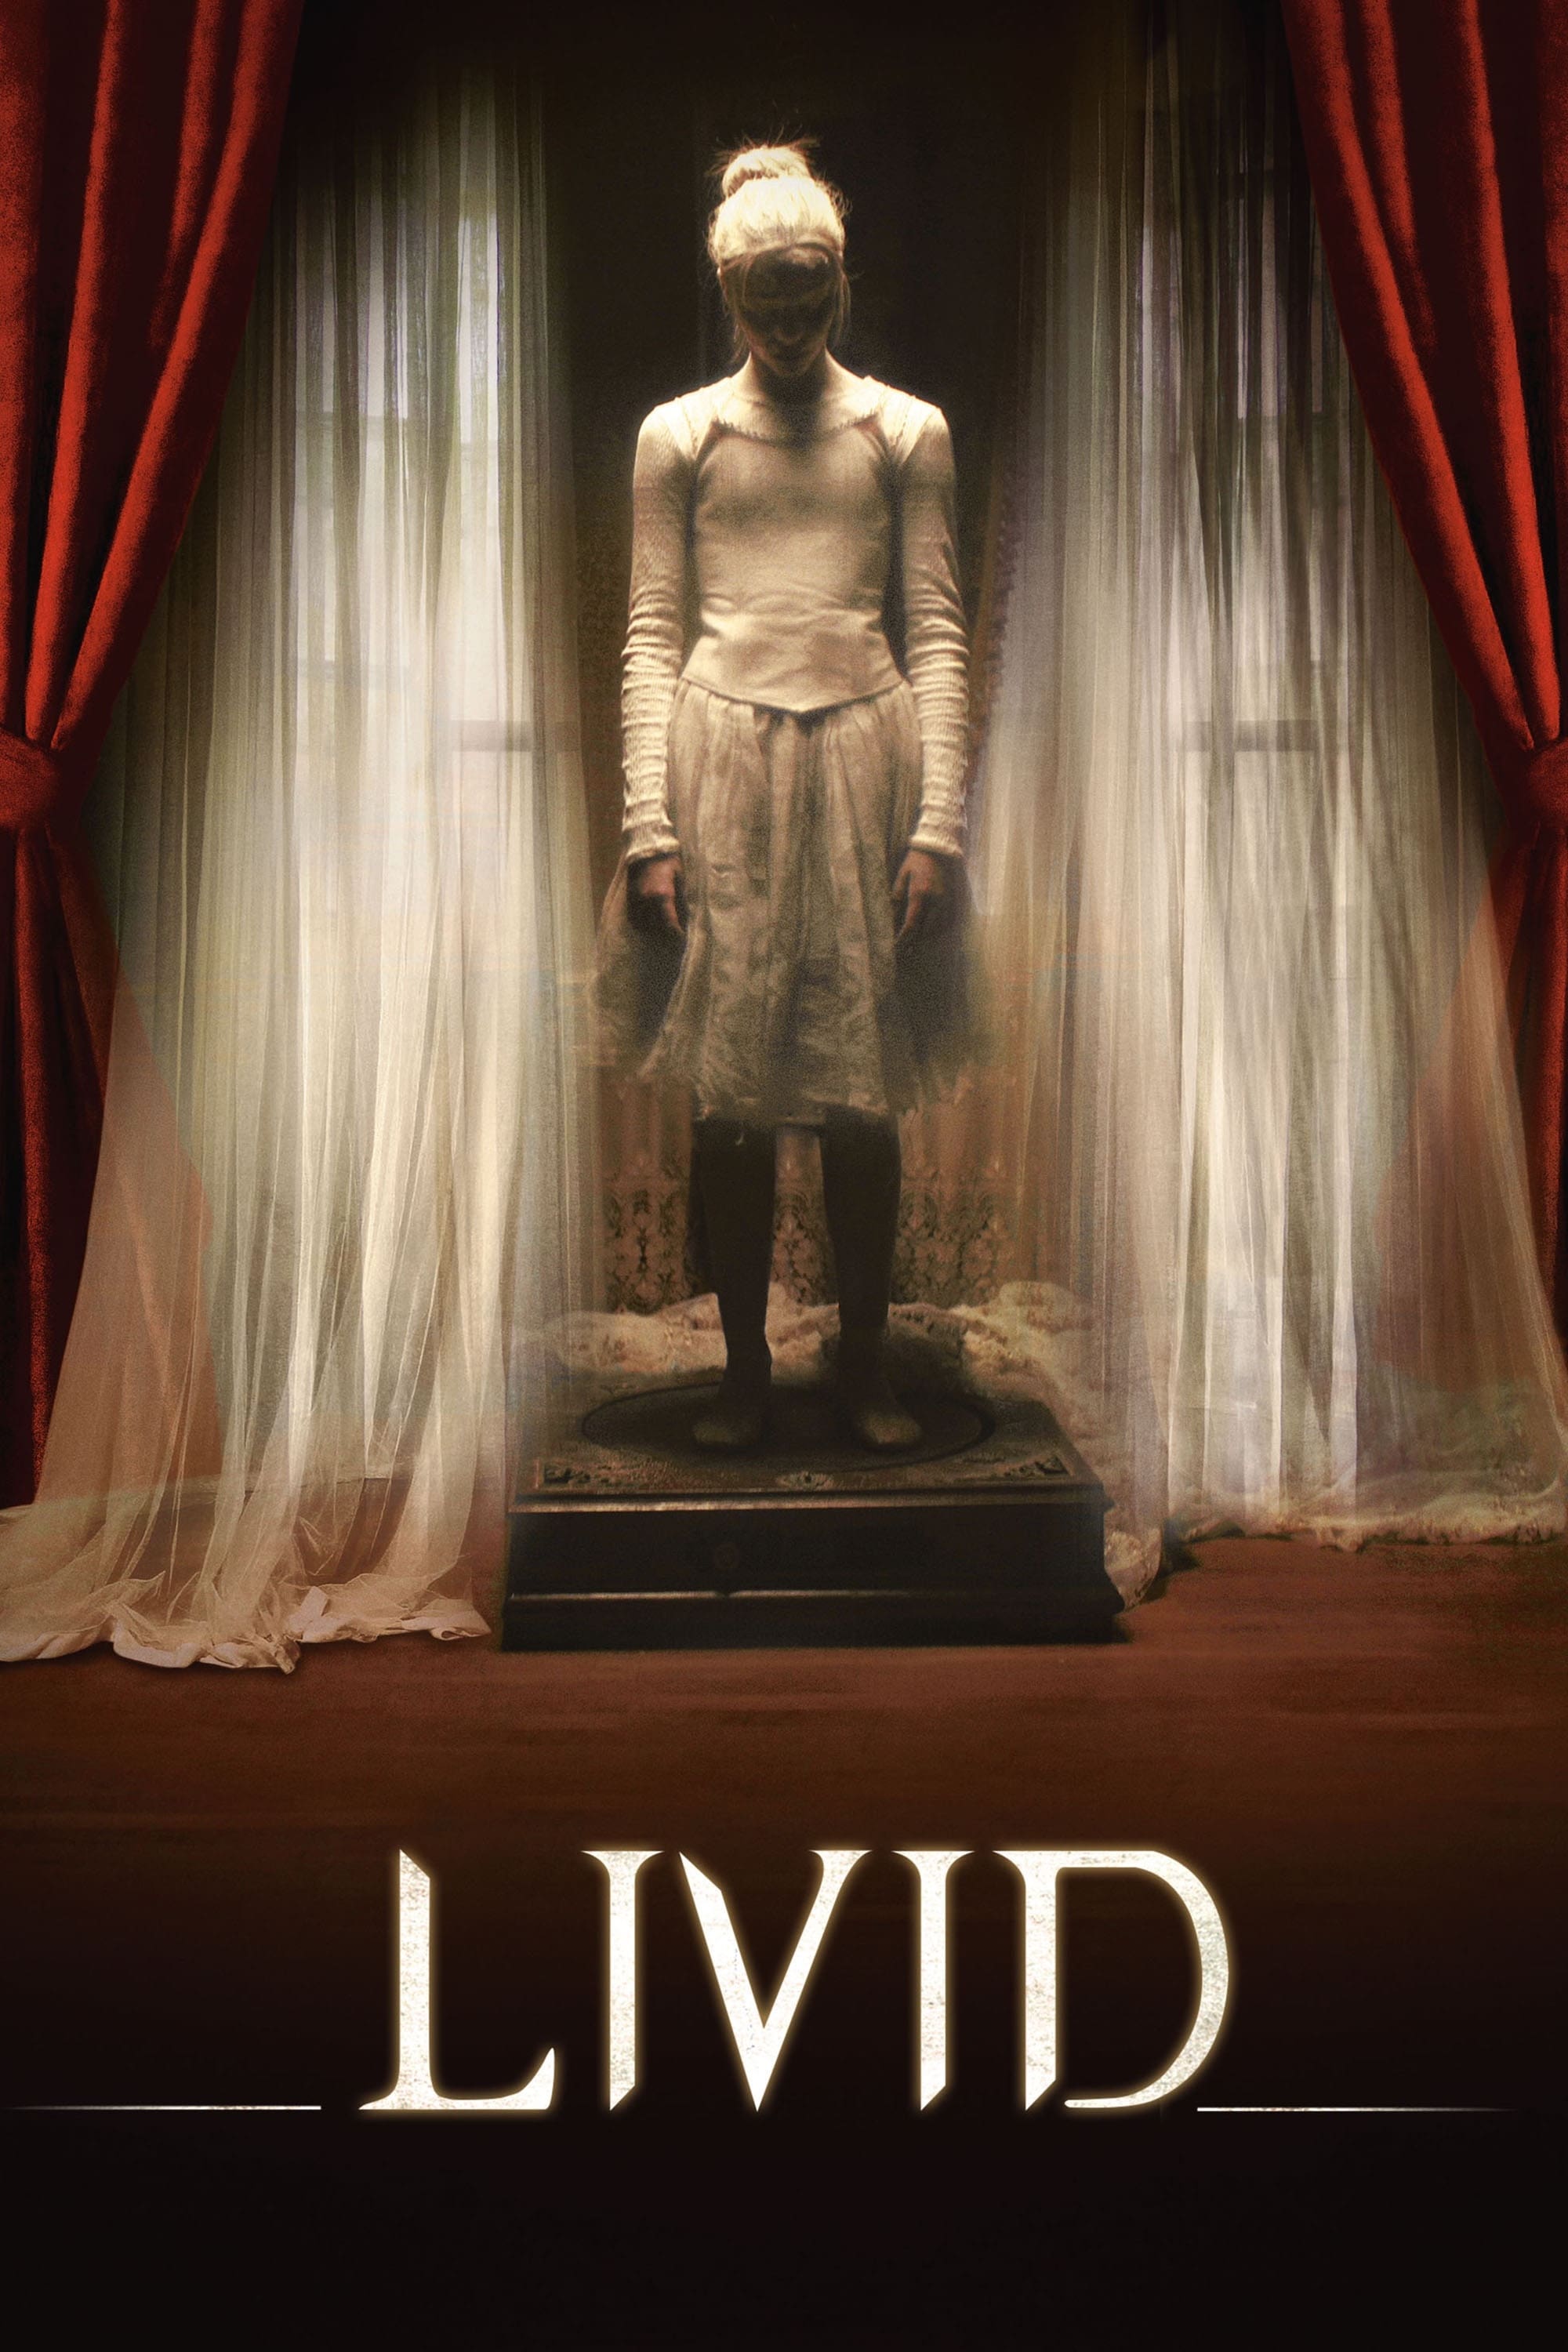 Livid (2011)